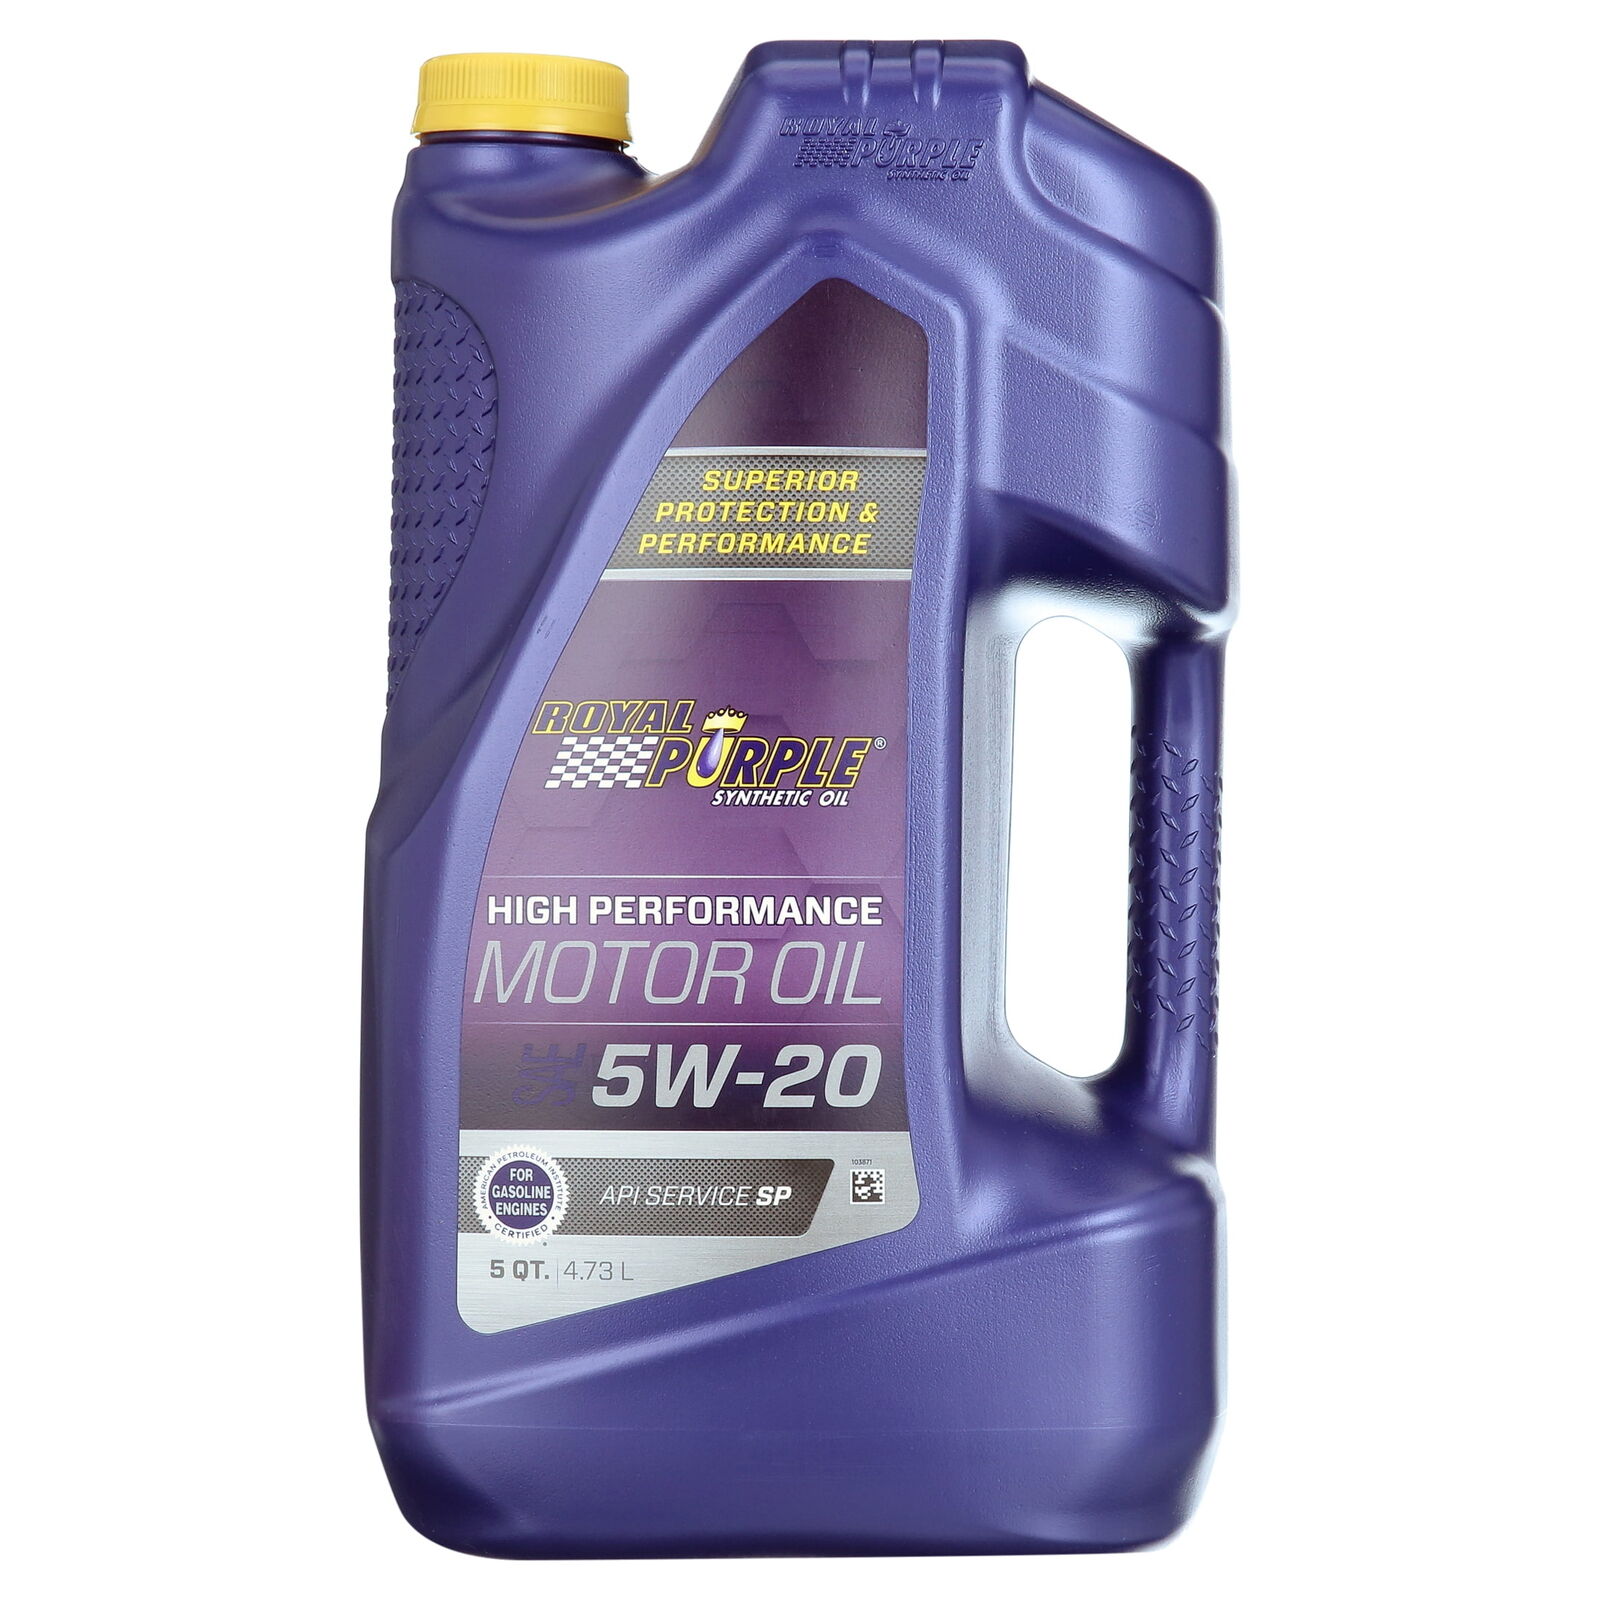 Royal Purple High Performance Motor Oil 5W-20 Premium Synthetic Motor Oil